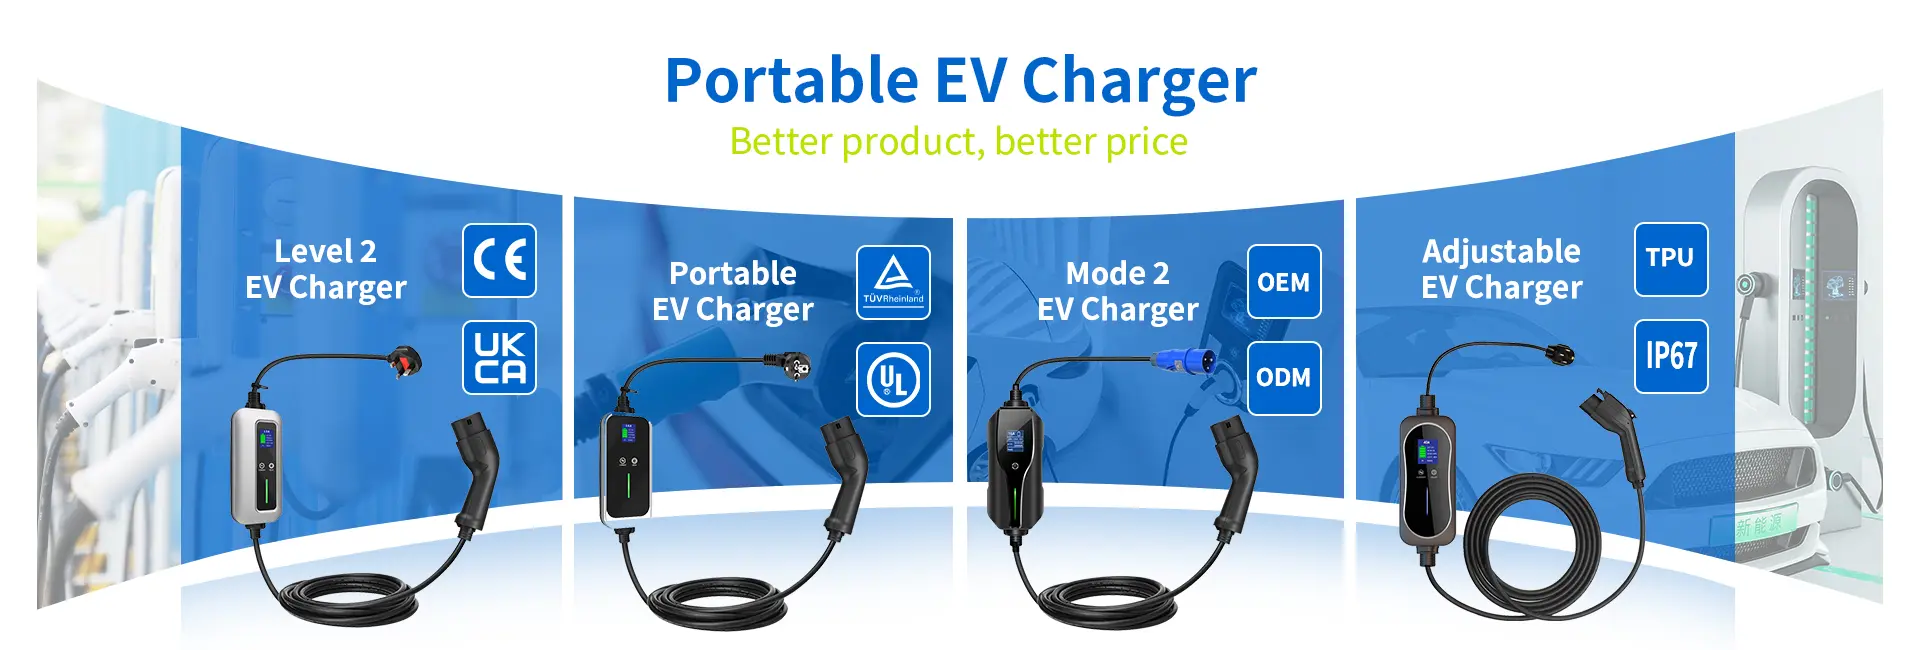 https://www.evsegroup.com/3phase-portable-ev-charger/